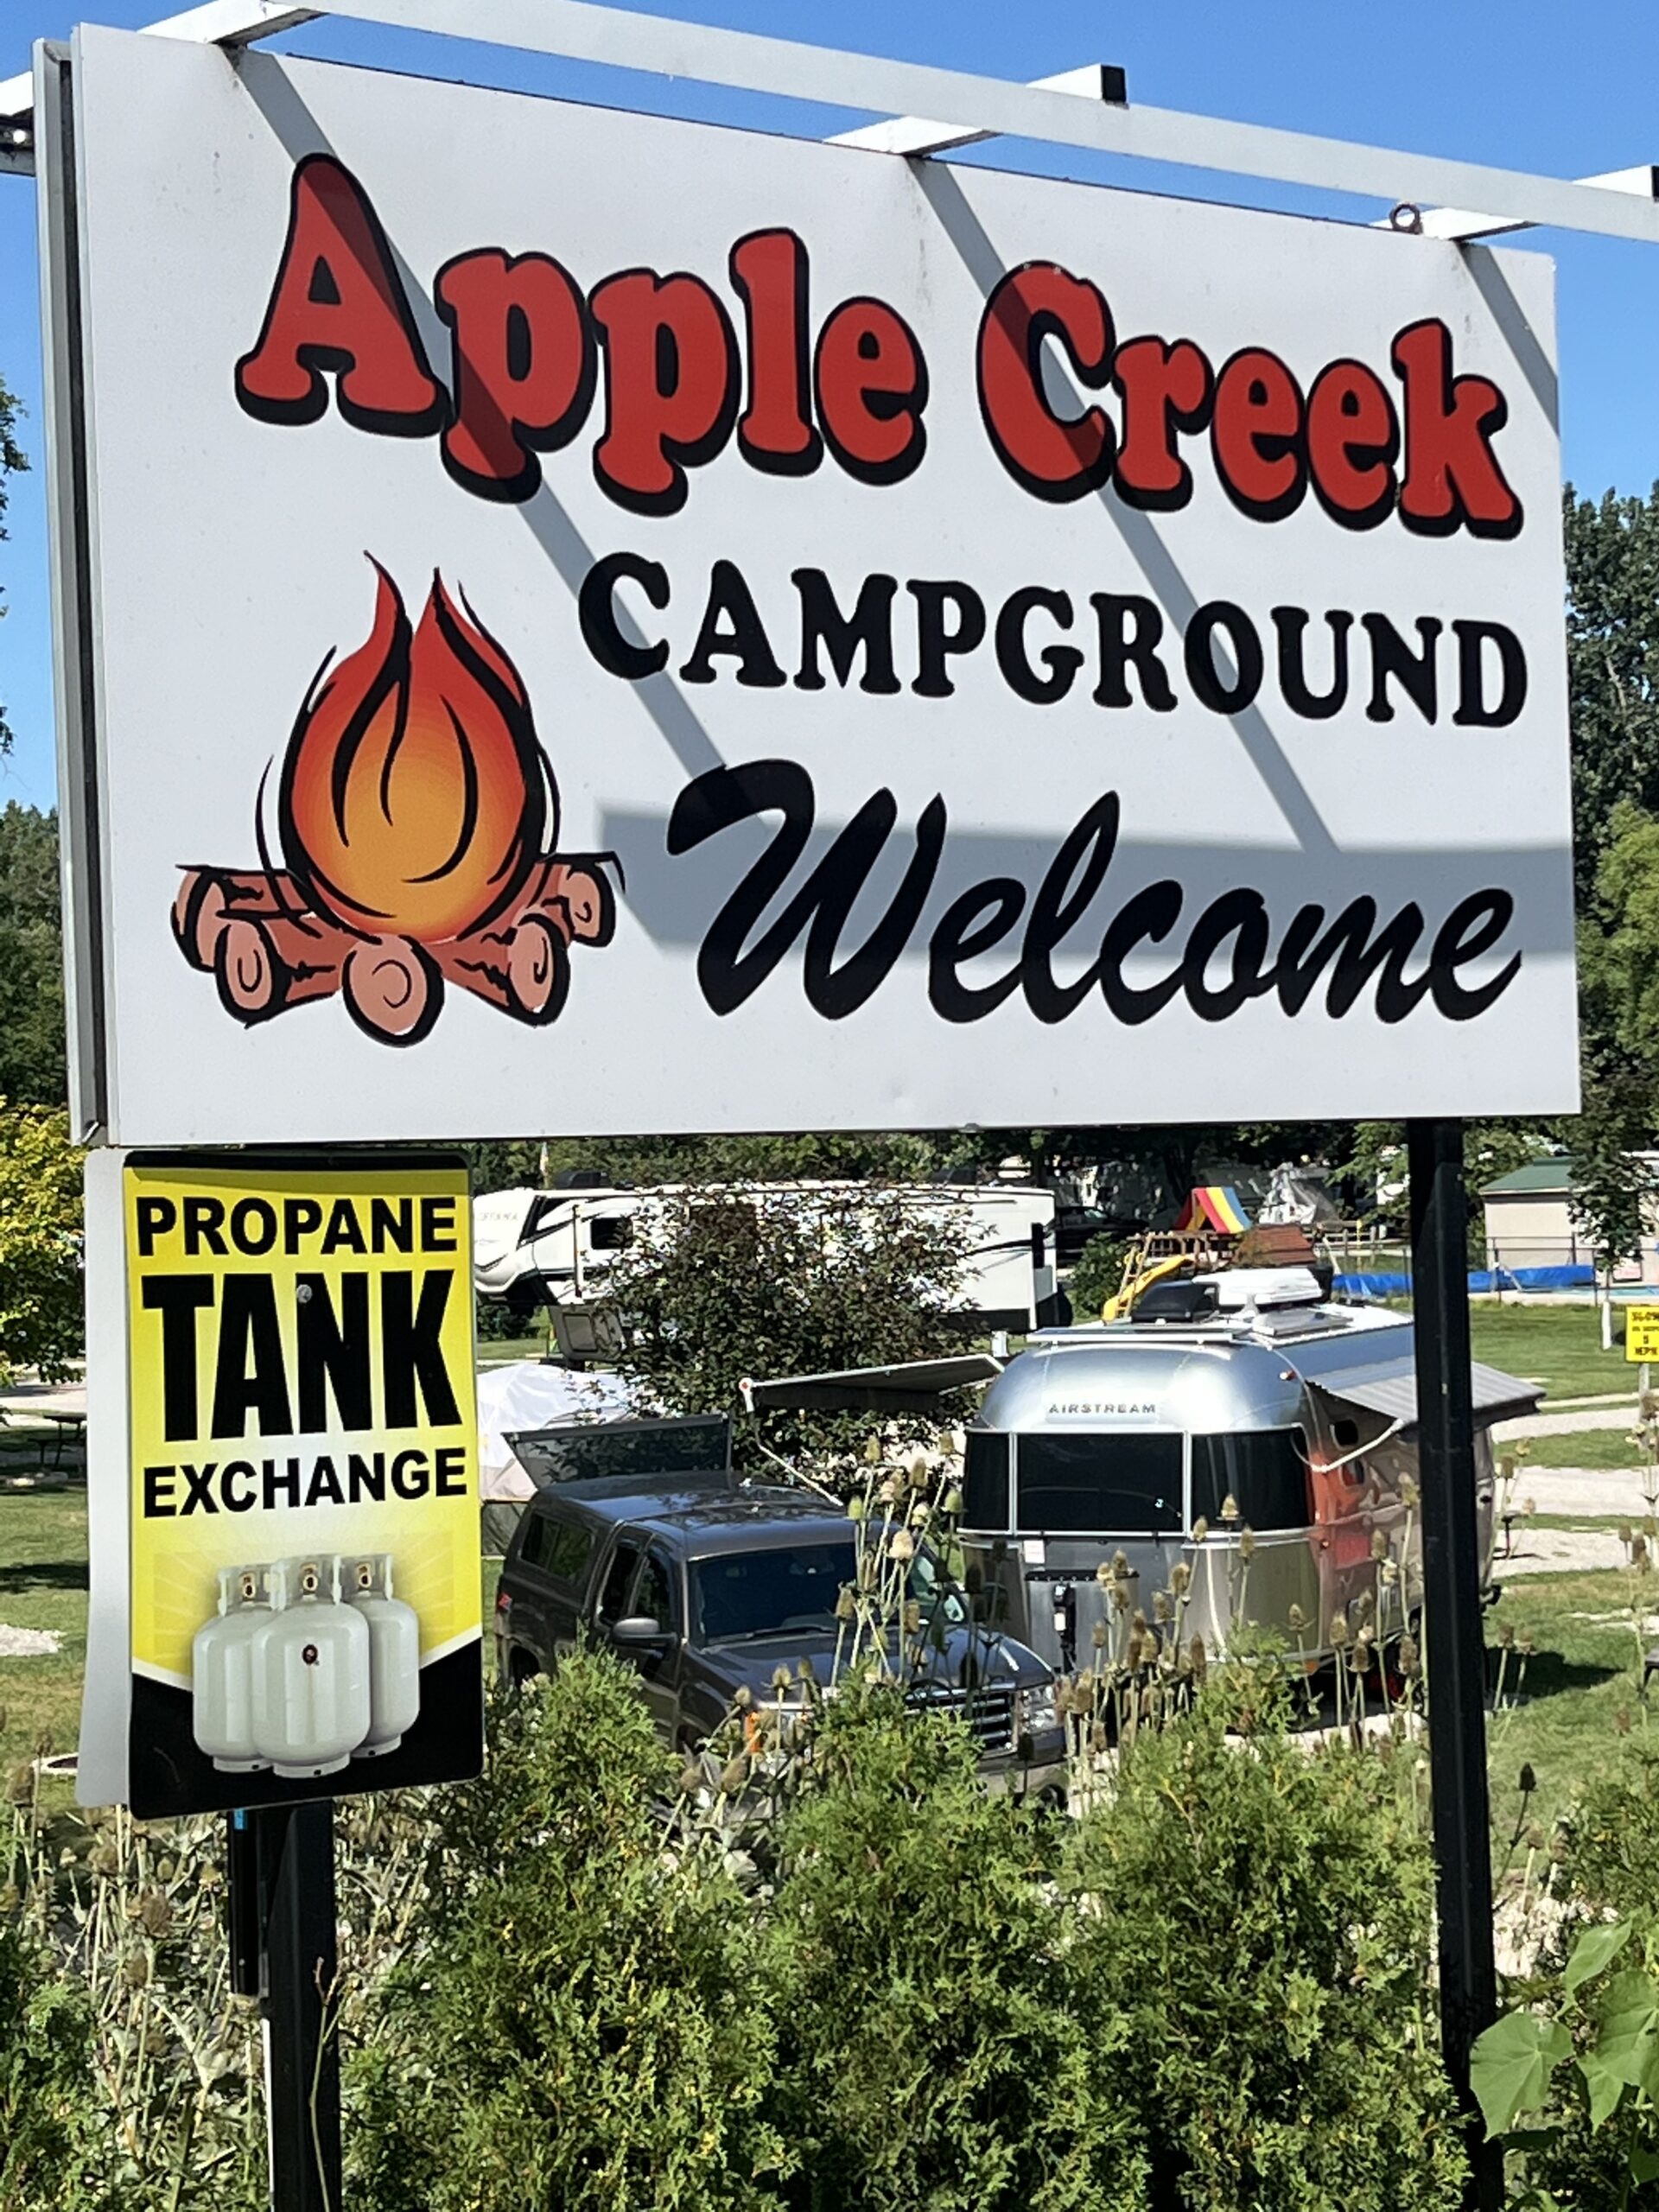 Apple Creek Campground, Appleton, WI